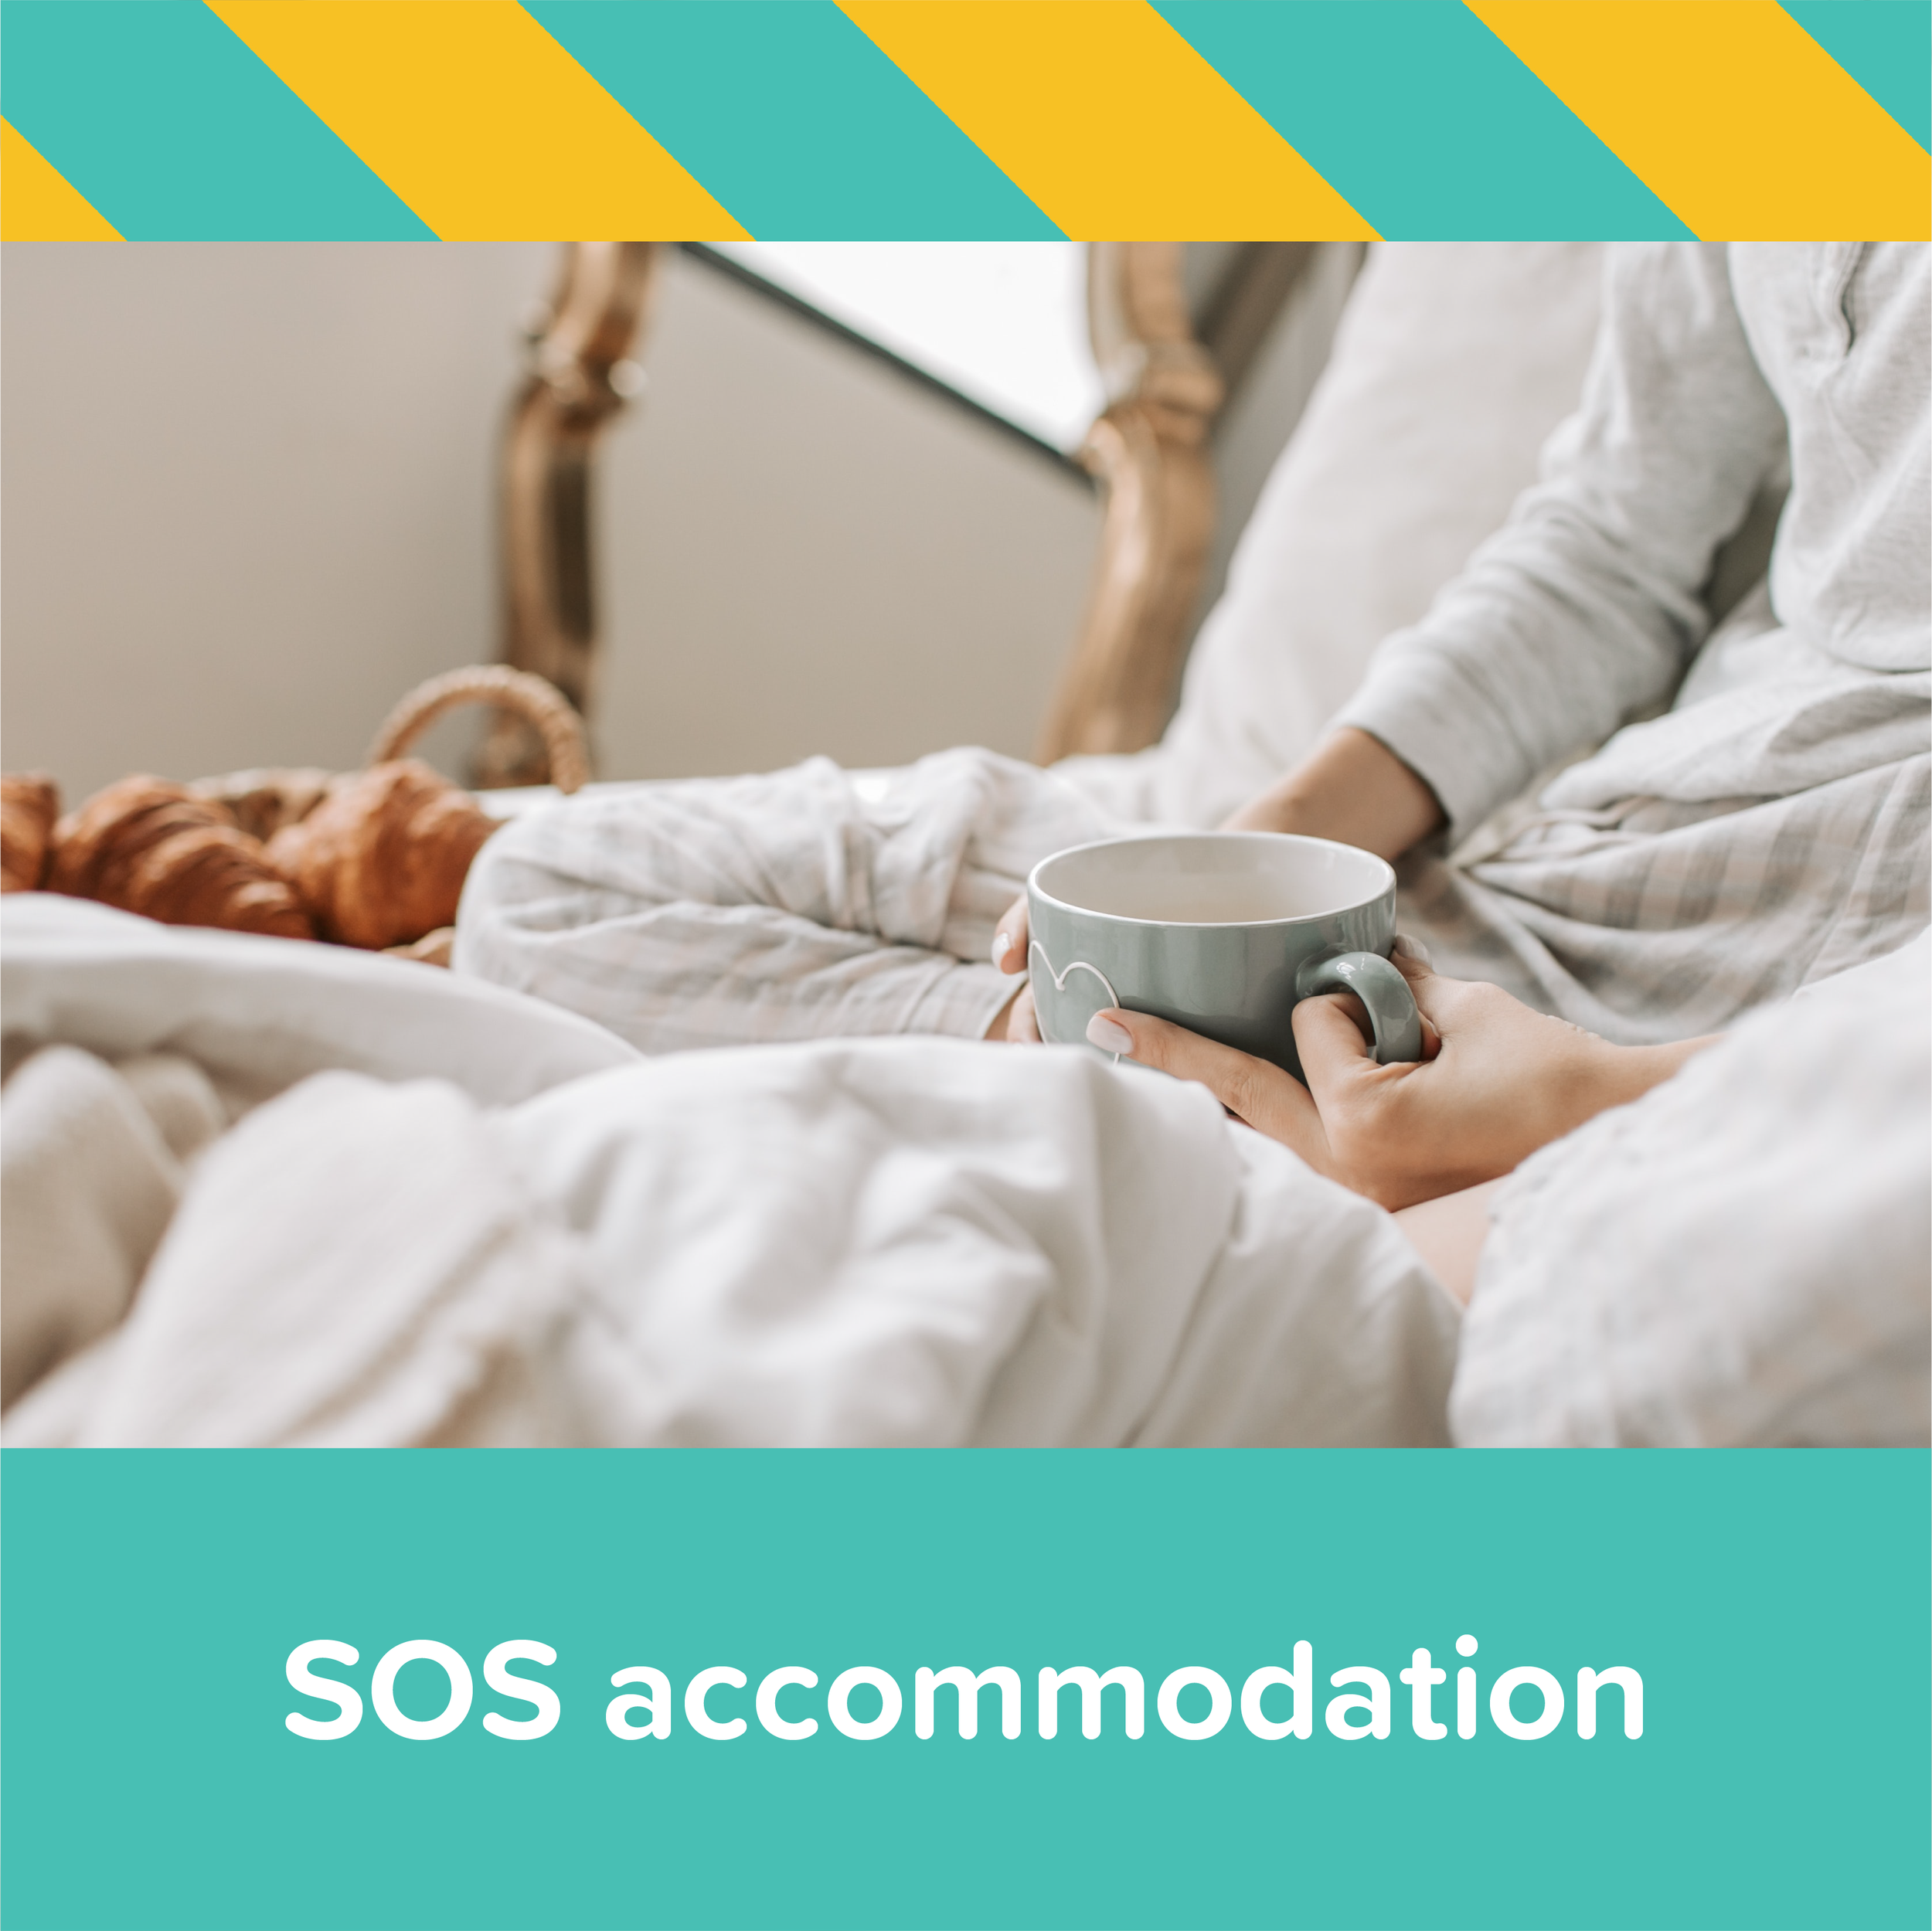 SOS accommodation